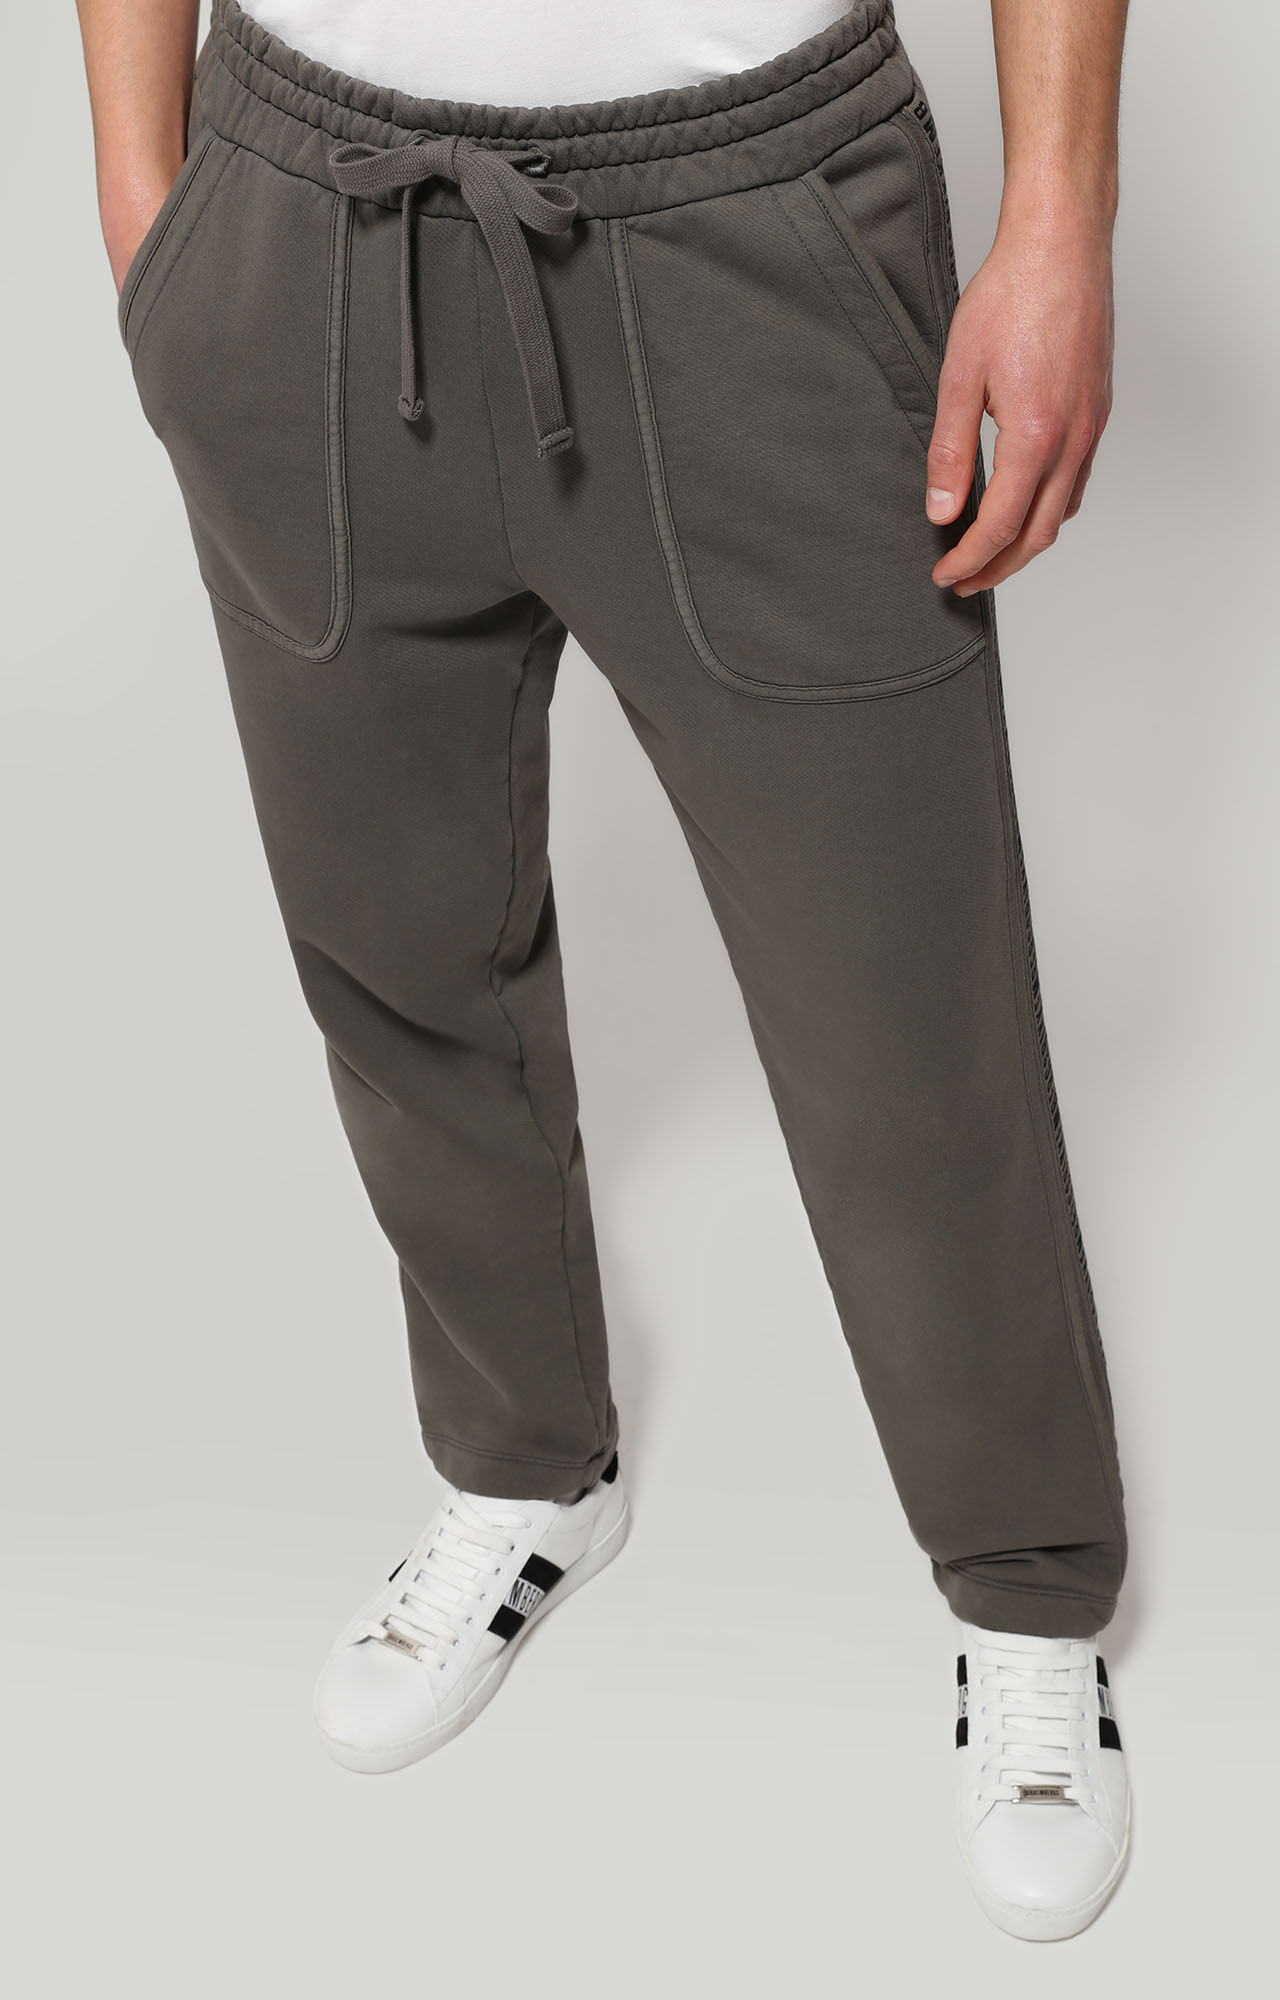 Men's elegant and sports trousers | Bikkembergs